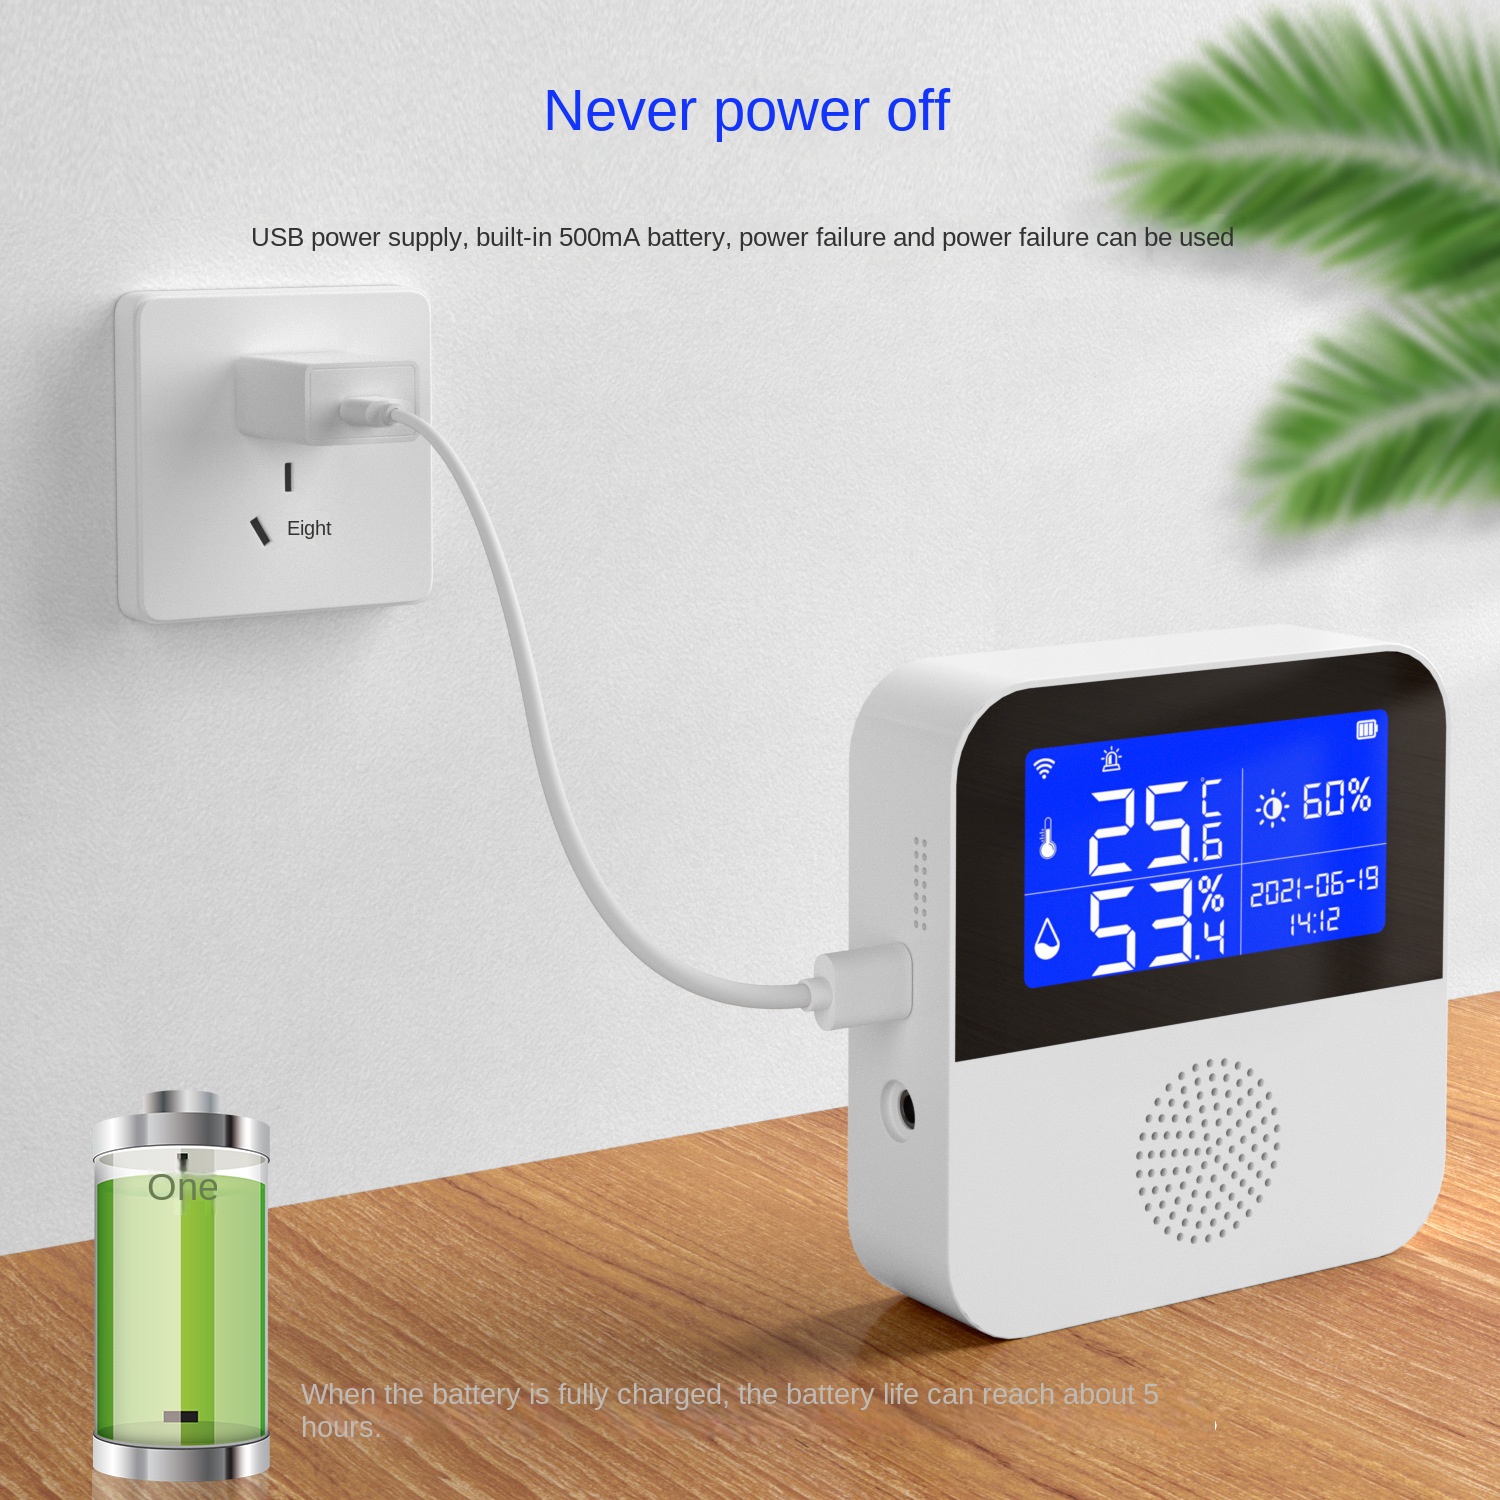 Tuya WiFi Temperature Humidity Sensor With LCD Display Smart Life Remote Monitor Indoor Thermometer Hygrometer Via Google Alexa